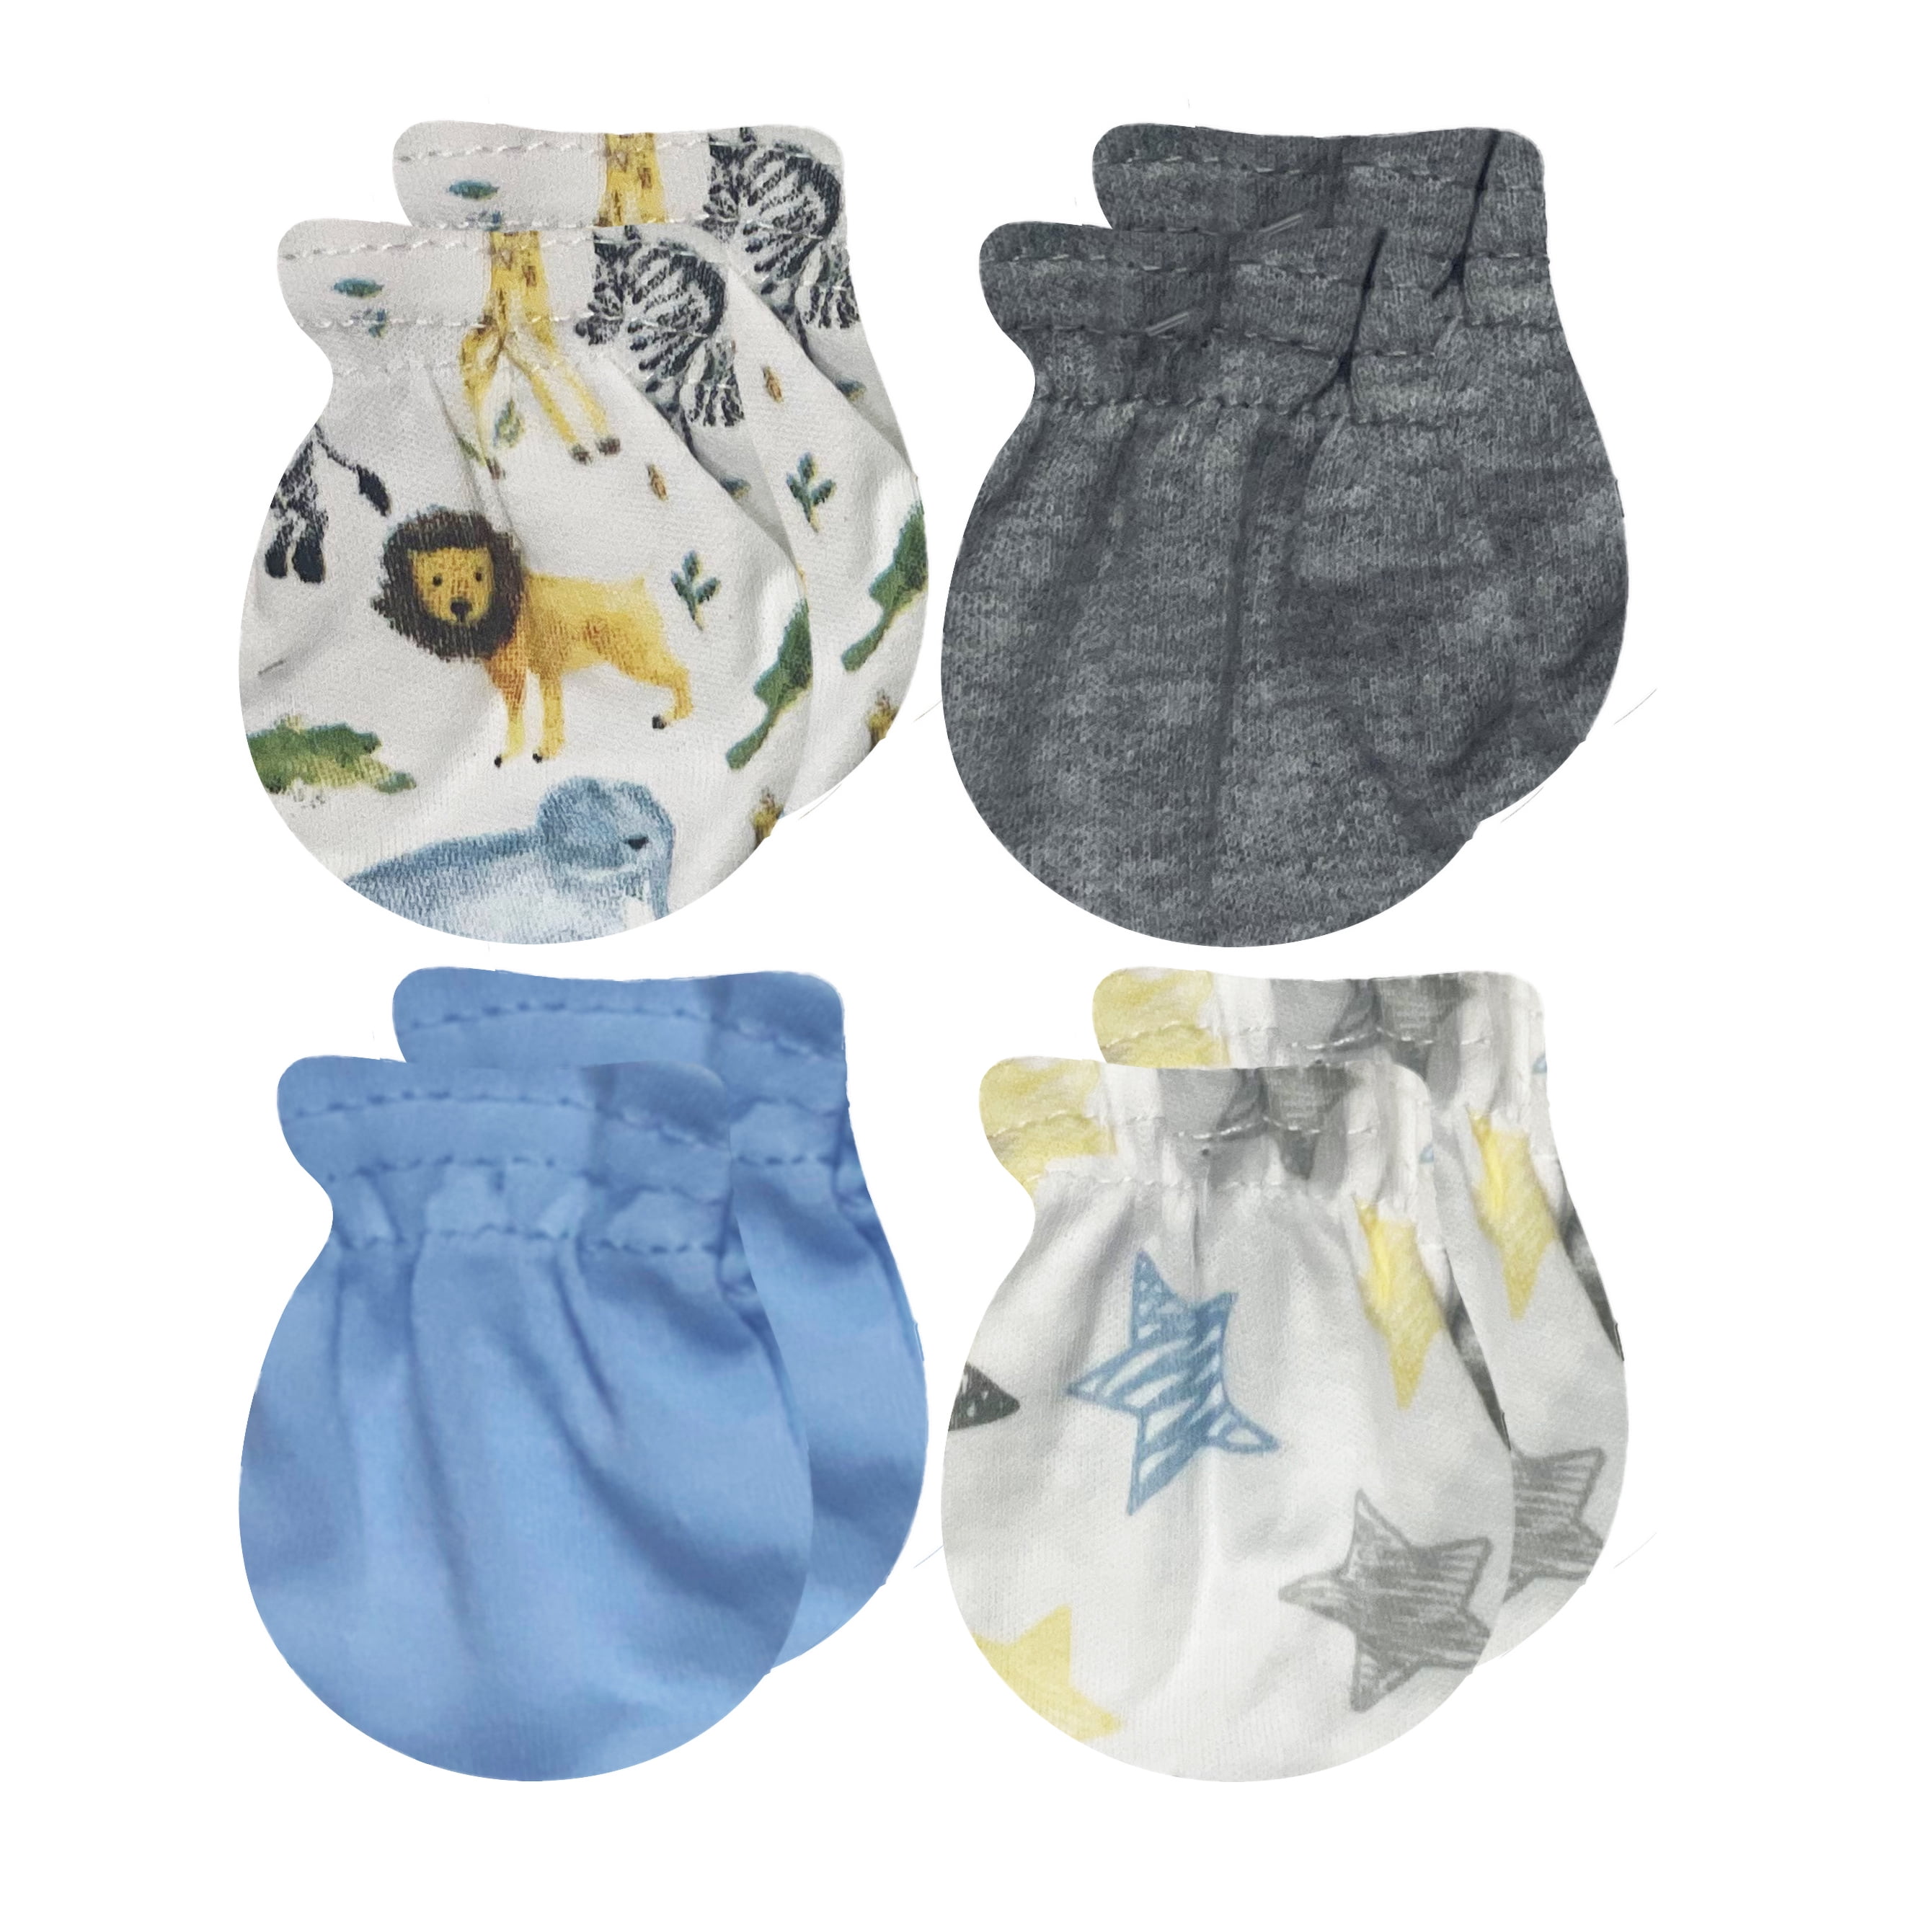 6PC/Lot Newborn Baby Infant Soft Cotton Handguard Anti Scratch Mittens Gloves 